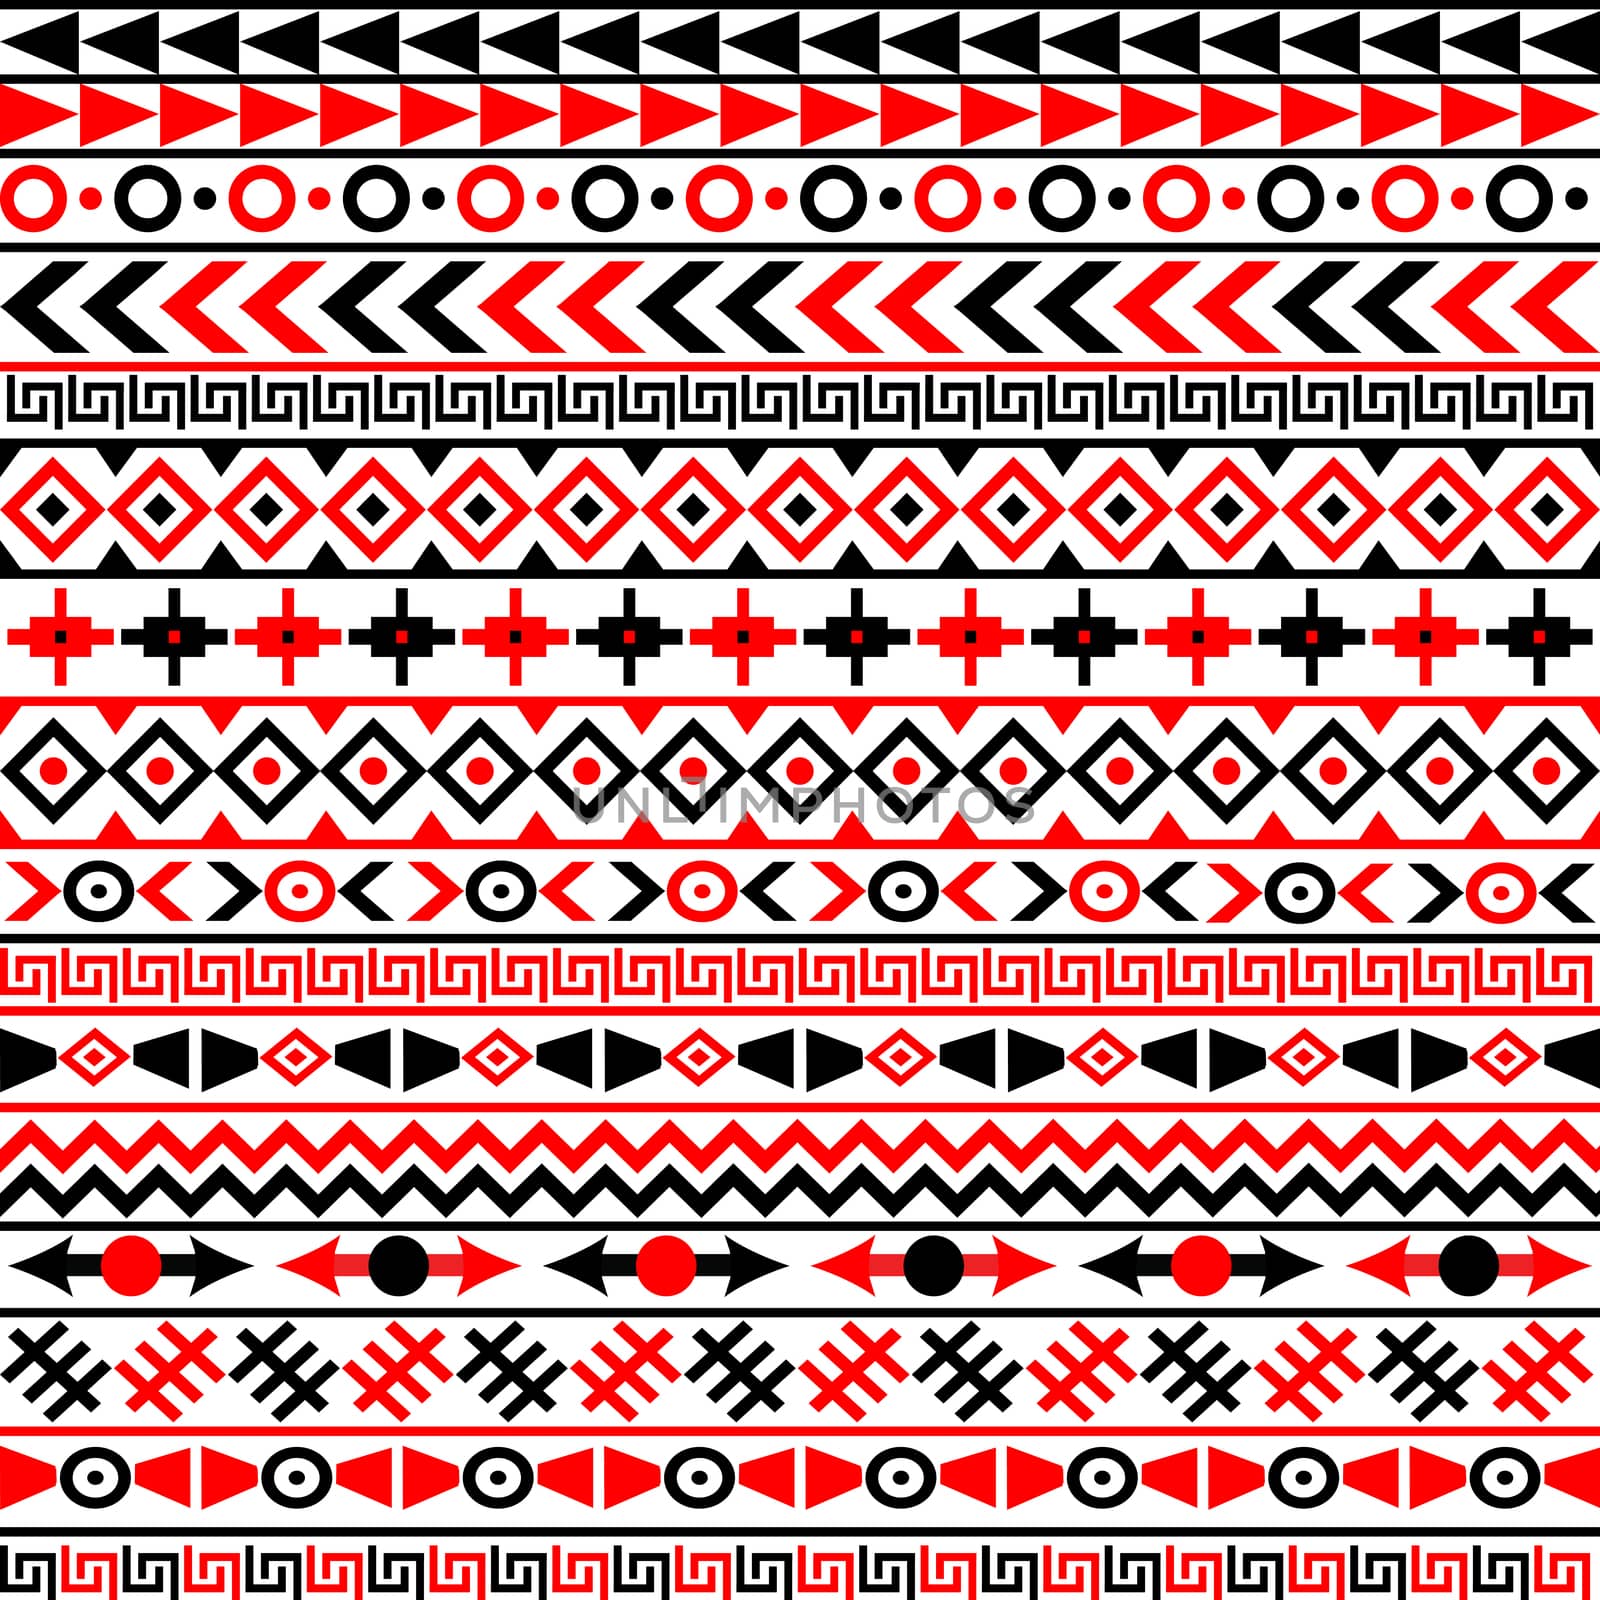 Ethnic motifs background by hibrida13